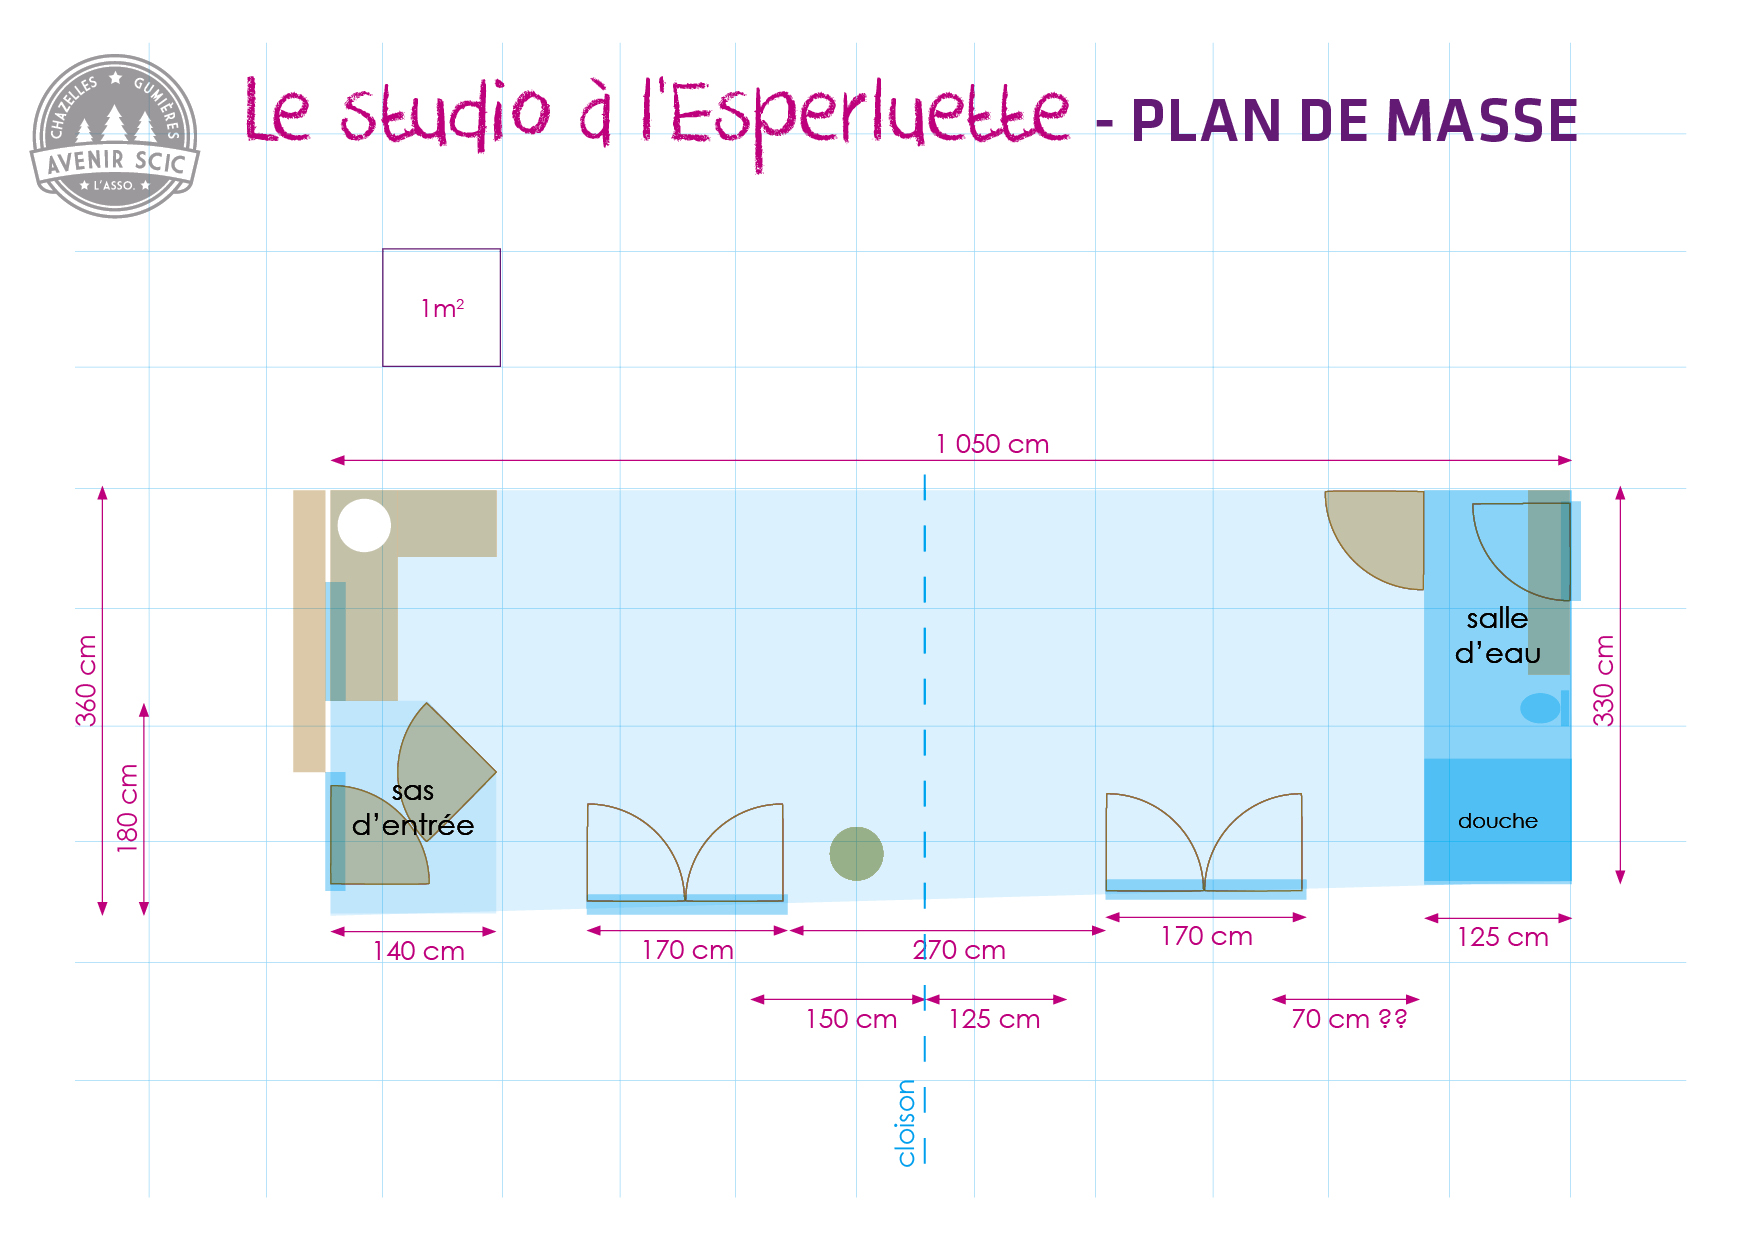 image plans_studio_Esperluette211116.jpg (0.5MB)